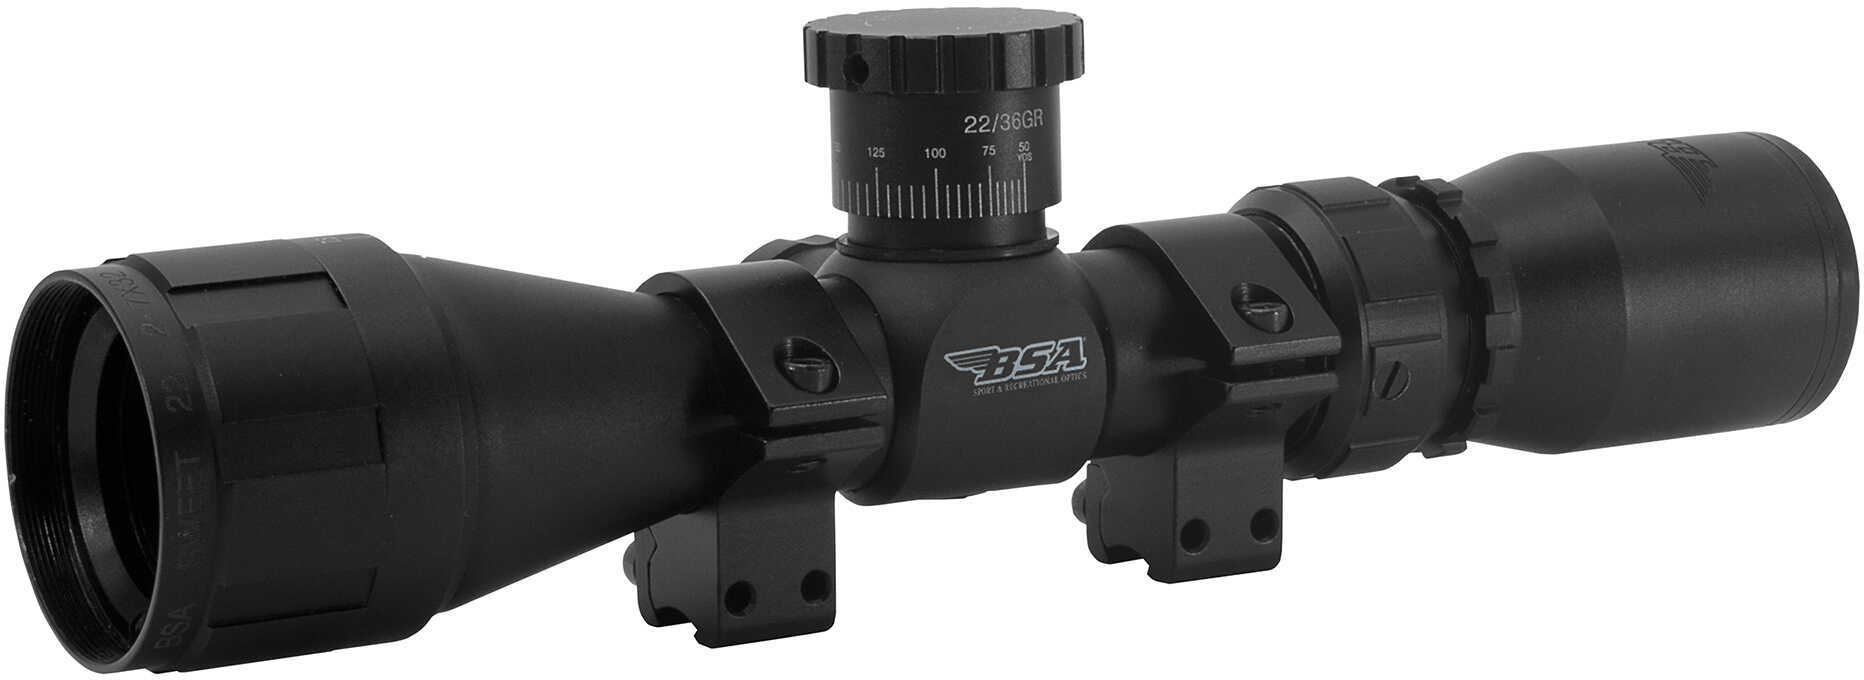 BSA Sweet .22 AO Riflescope 2-7x32mm 1" Main Tube Standard Reticle Black